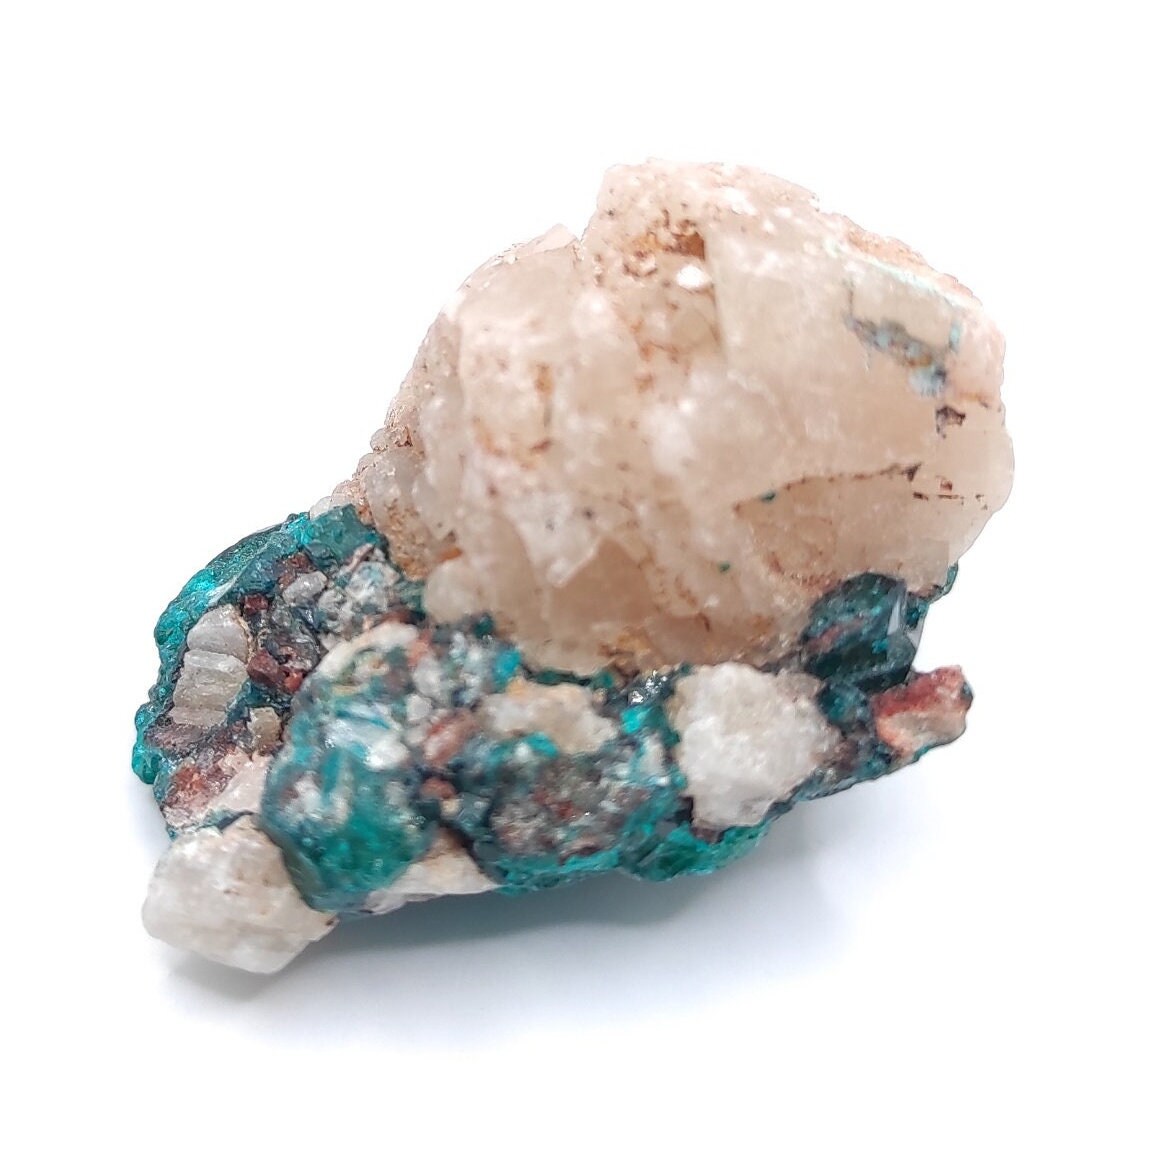 14g Dioptase Crystal from Congo - Natural Green Dioptase Mineral Specimen - Small Dioptase Specimen - Raw Dioptase Gem